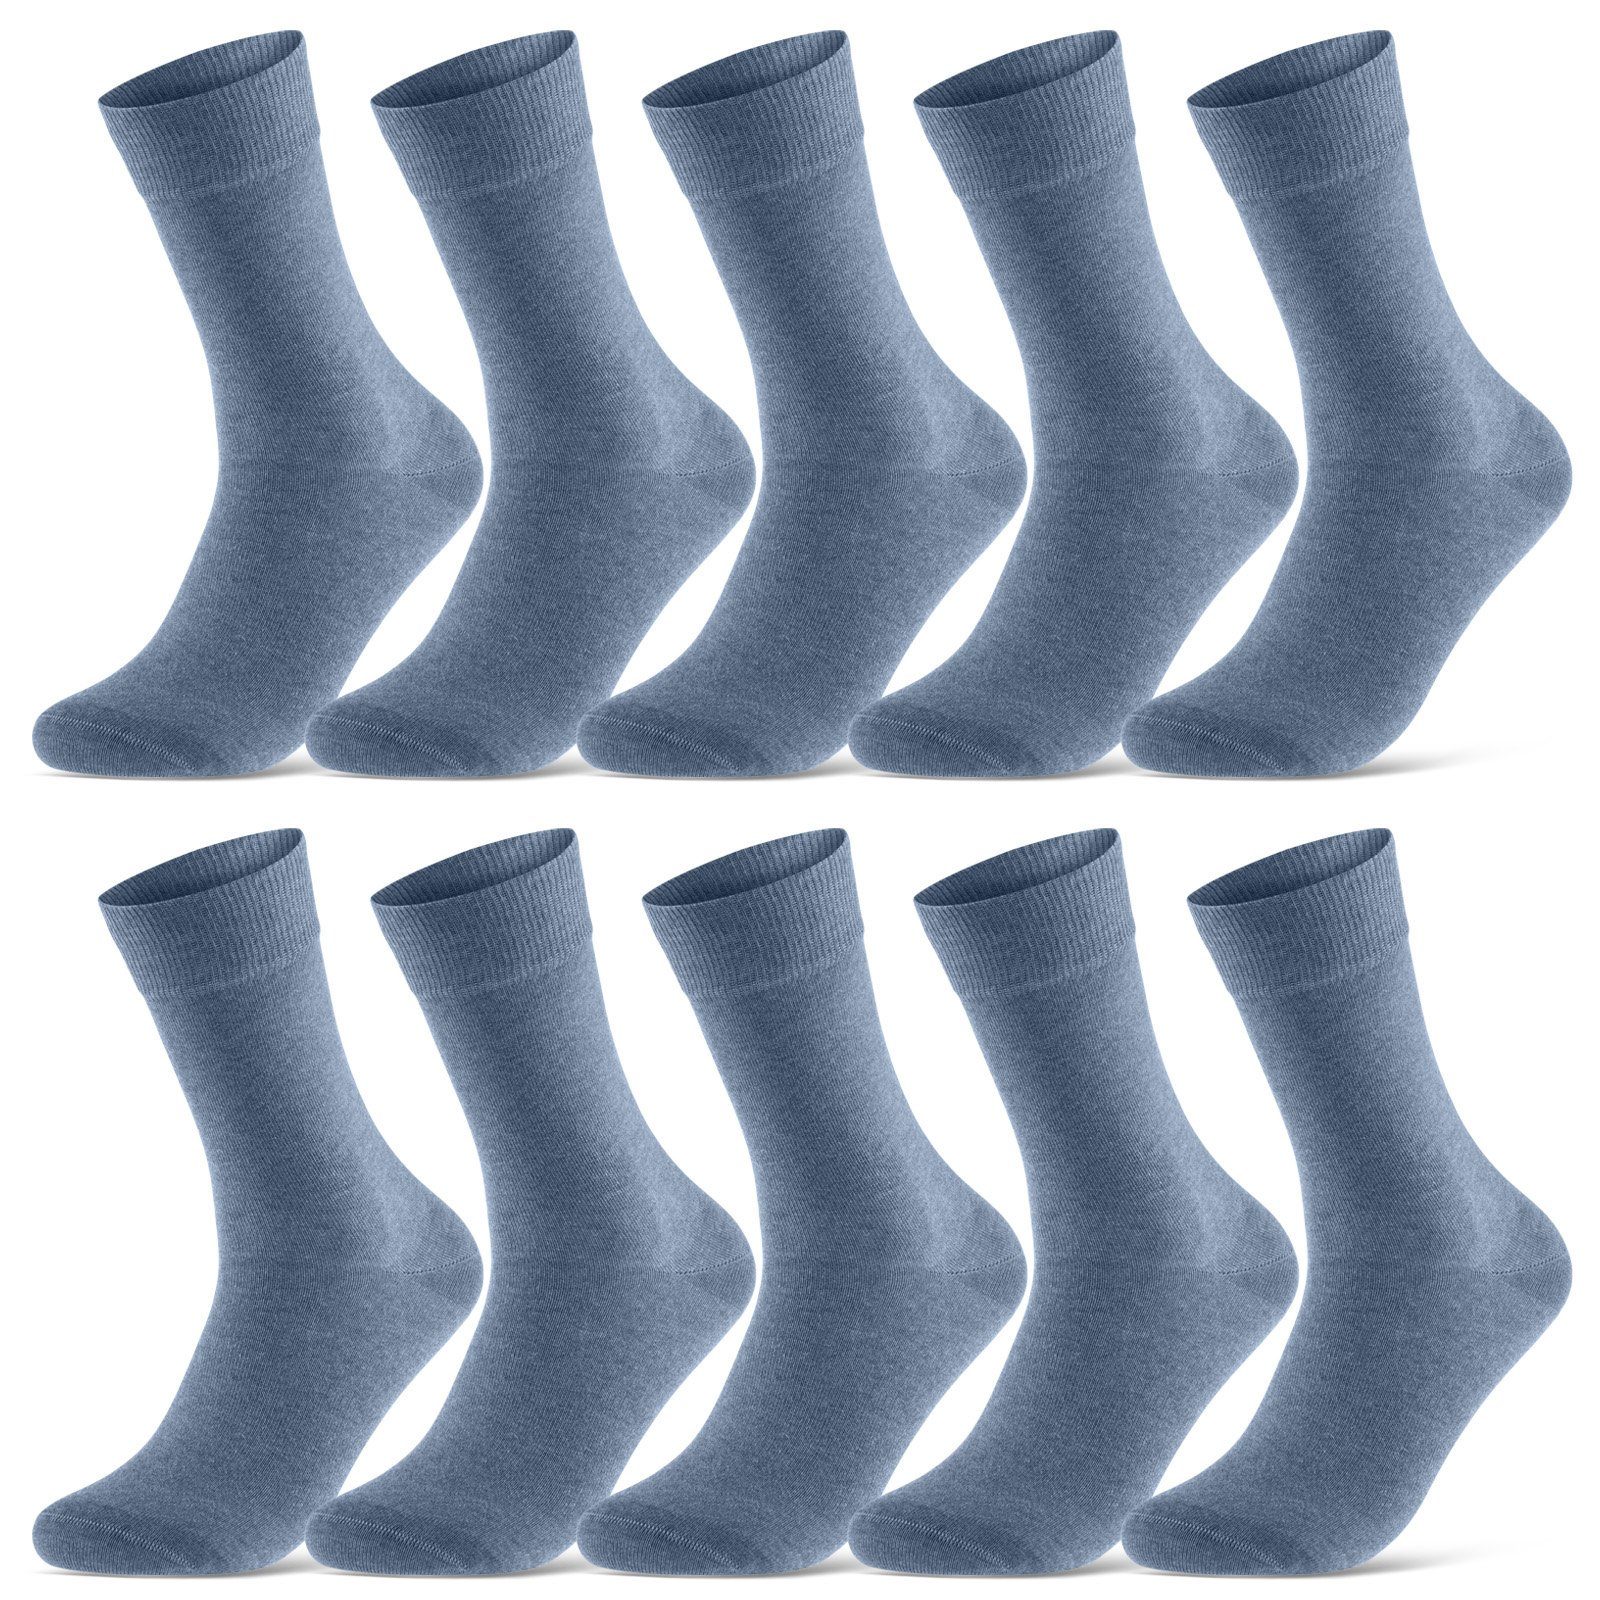 sockenkauf24 Socken 10 70201T Socken Komfortbund mit WP & (Basicline) Damen Baumwolle (Jeans, Herren Socken Paar Business 39-42) 